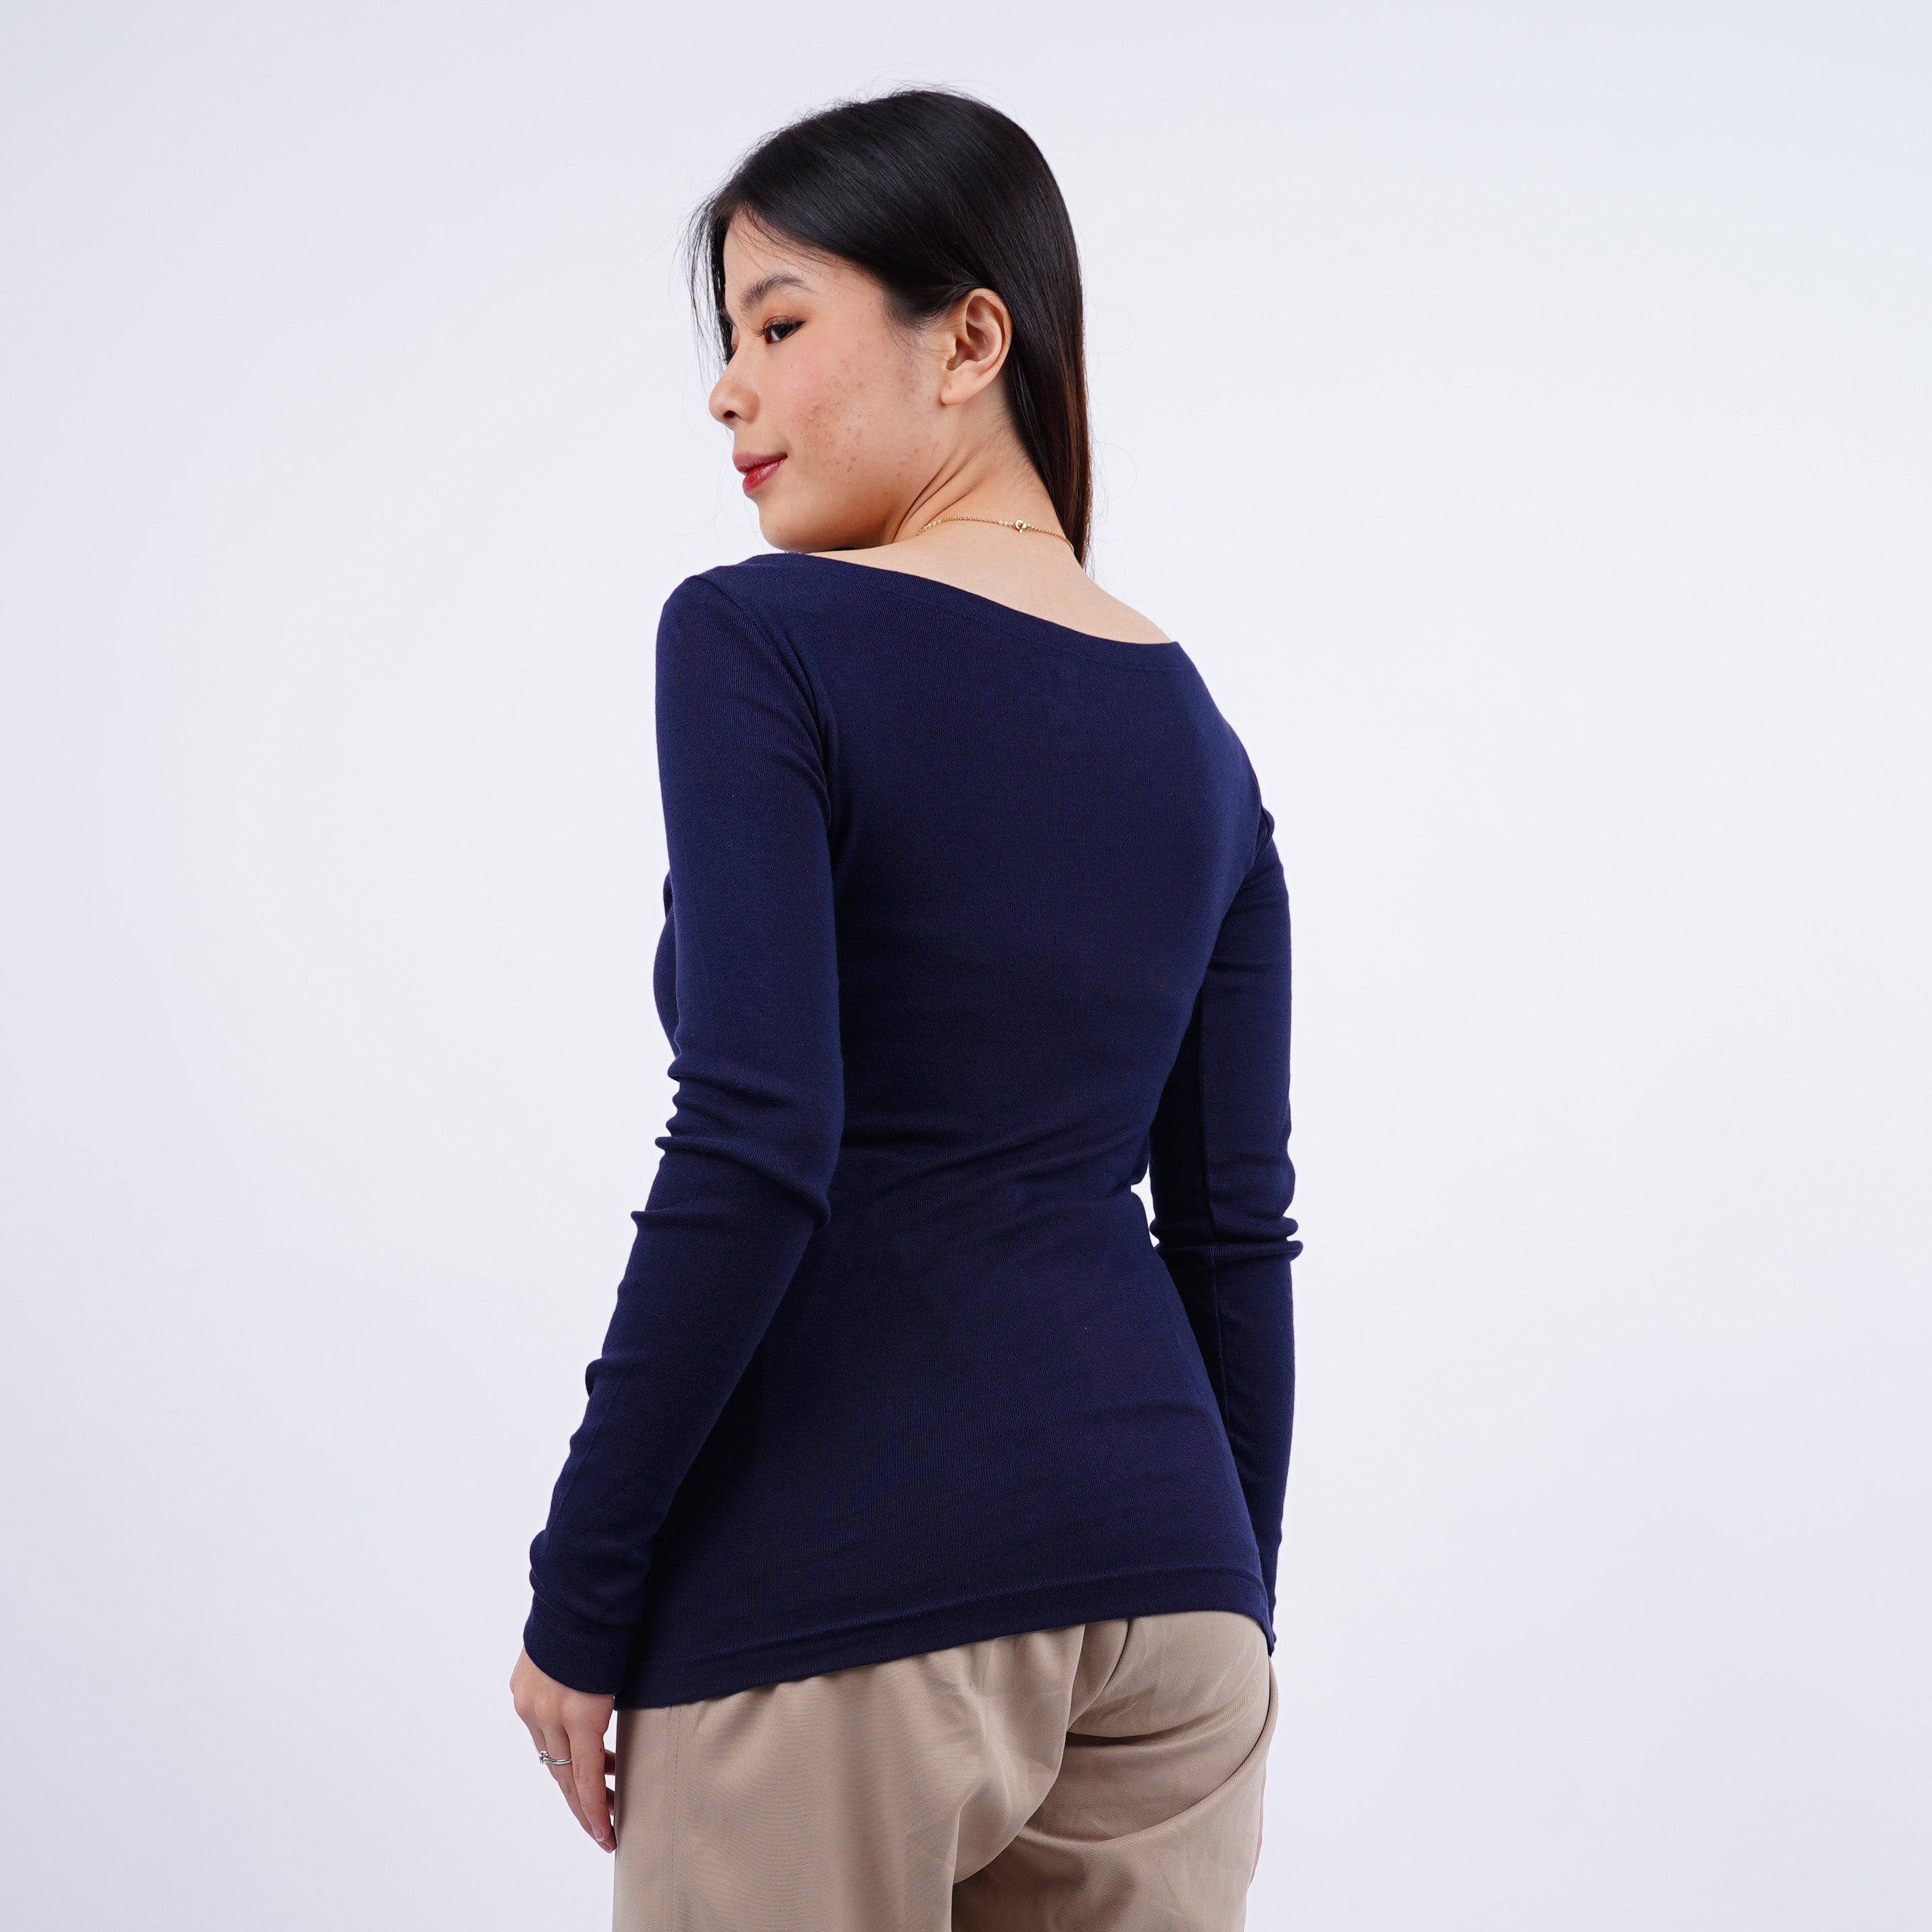 Kaos Wanita Lengan Panjang Model Flat Neck [CG-ONTL 04]